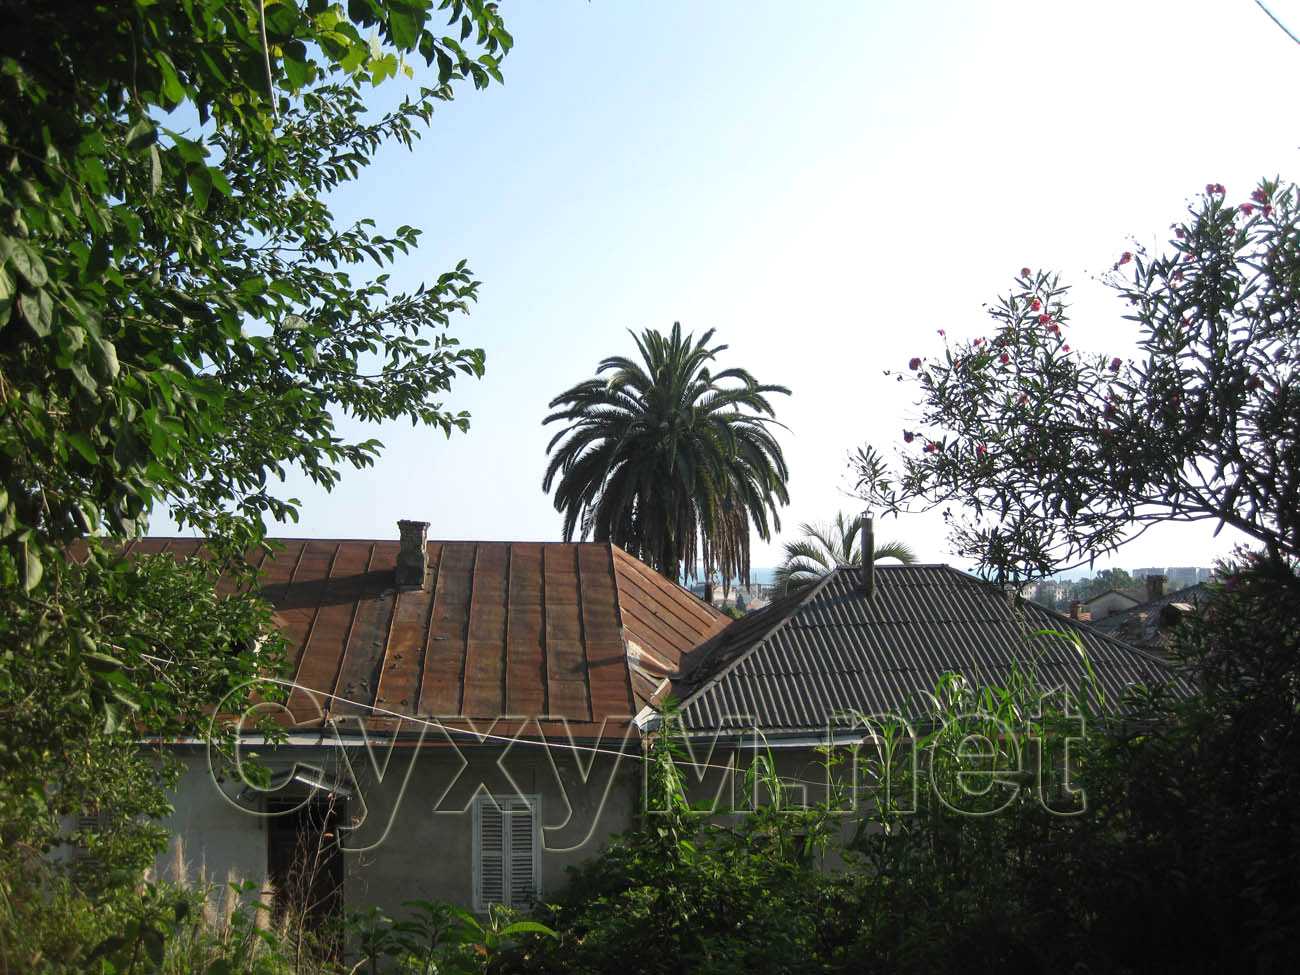 канарская финиковая пальма возвышается над крышей дома